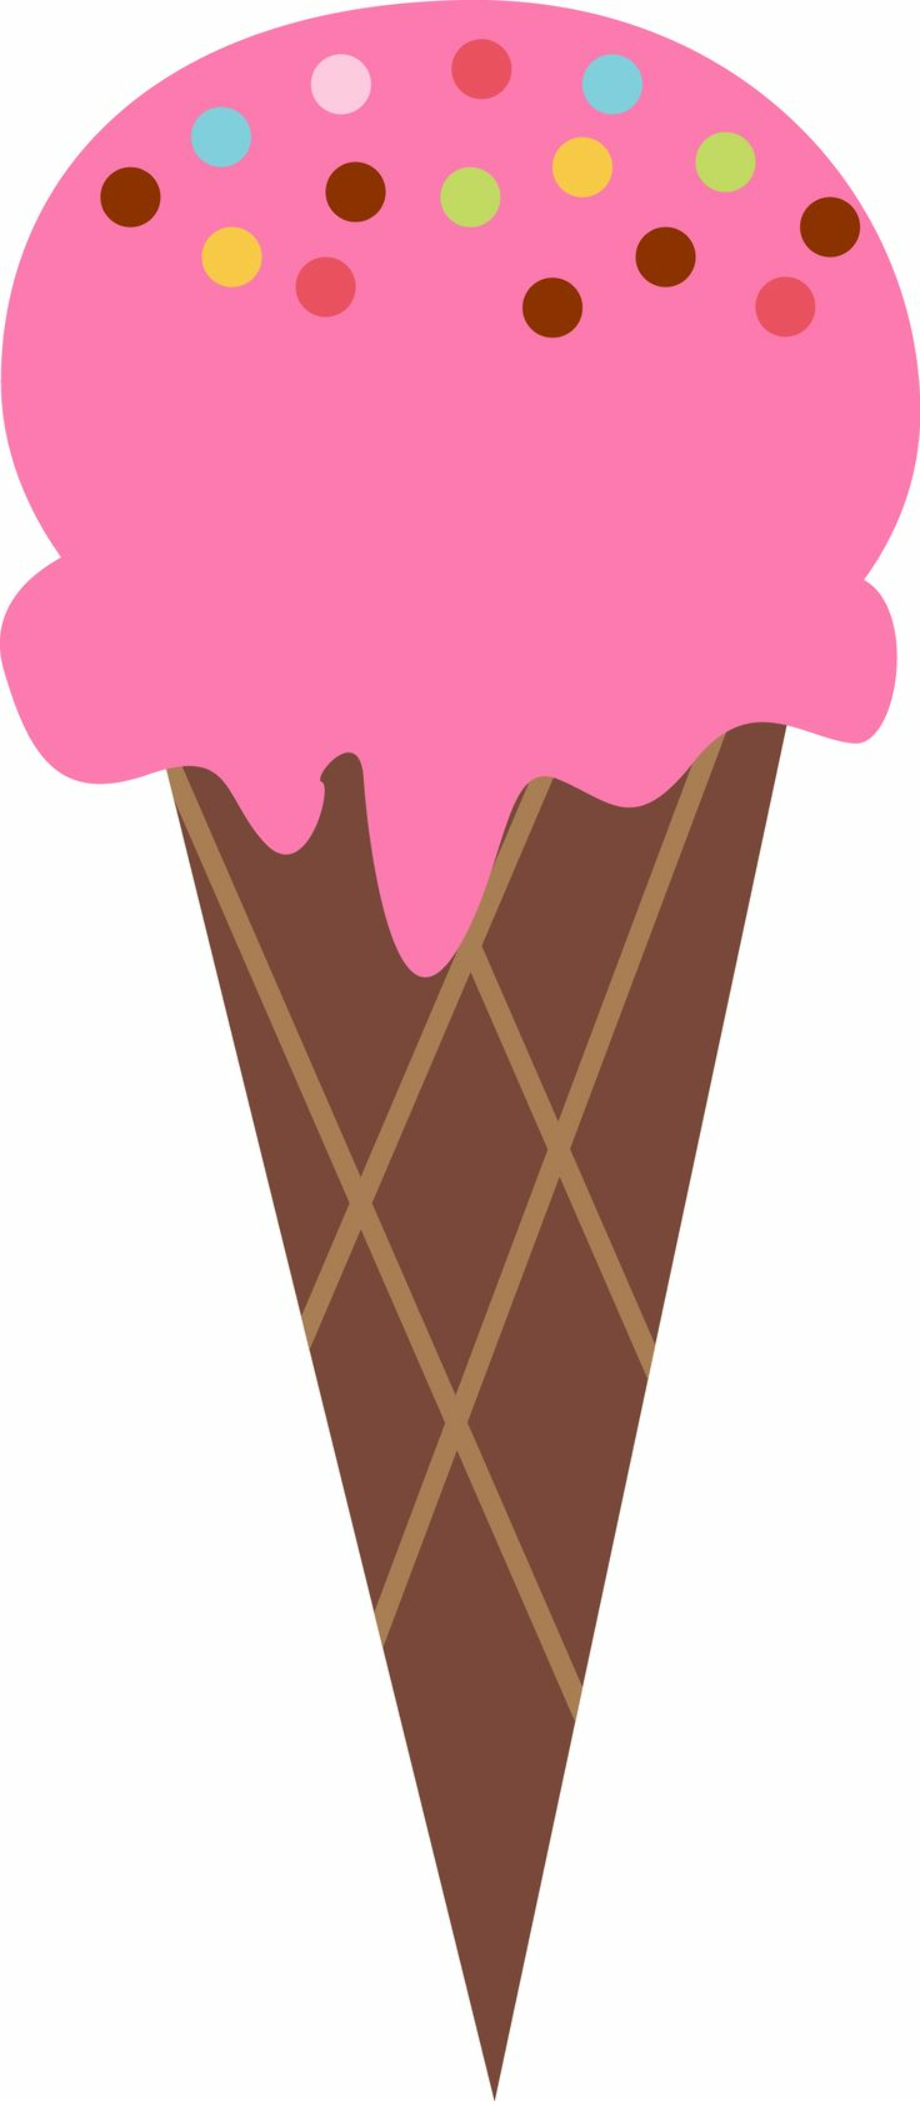 download high quality ice cream cone clip art cartoon